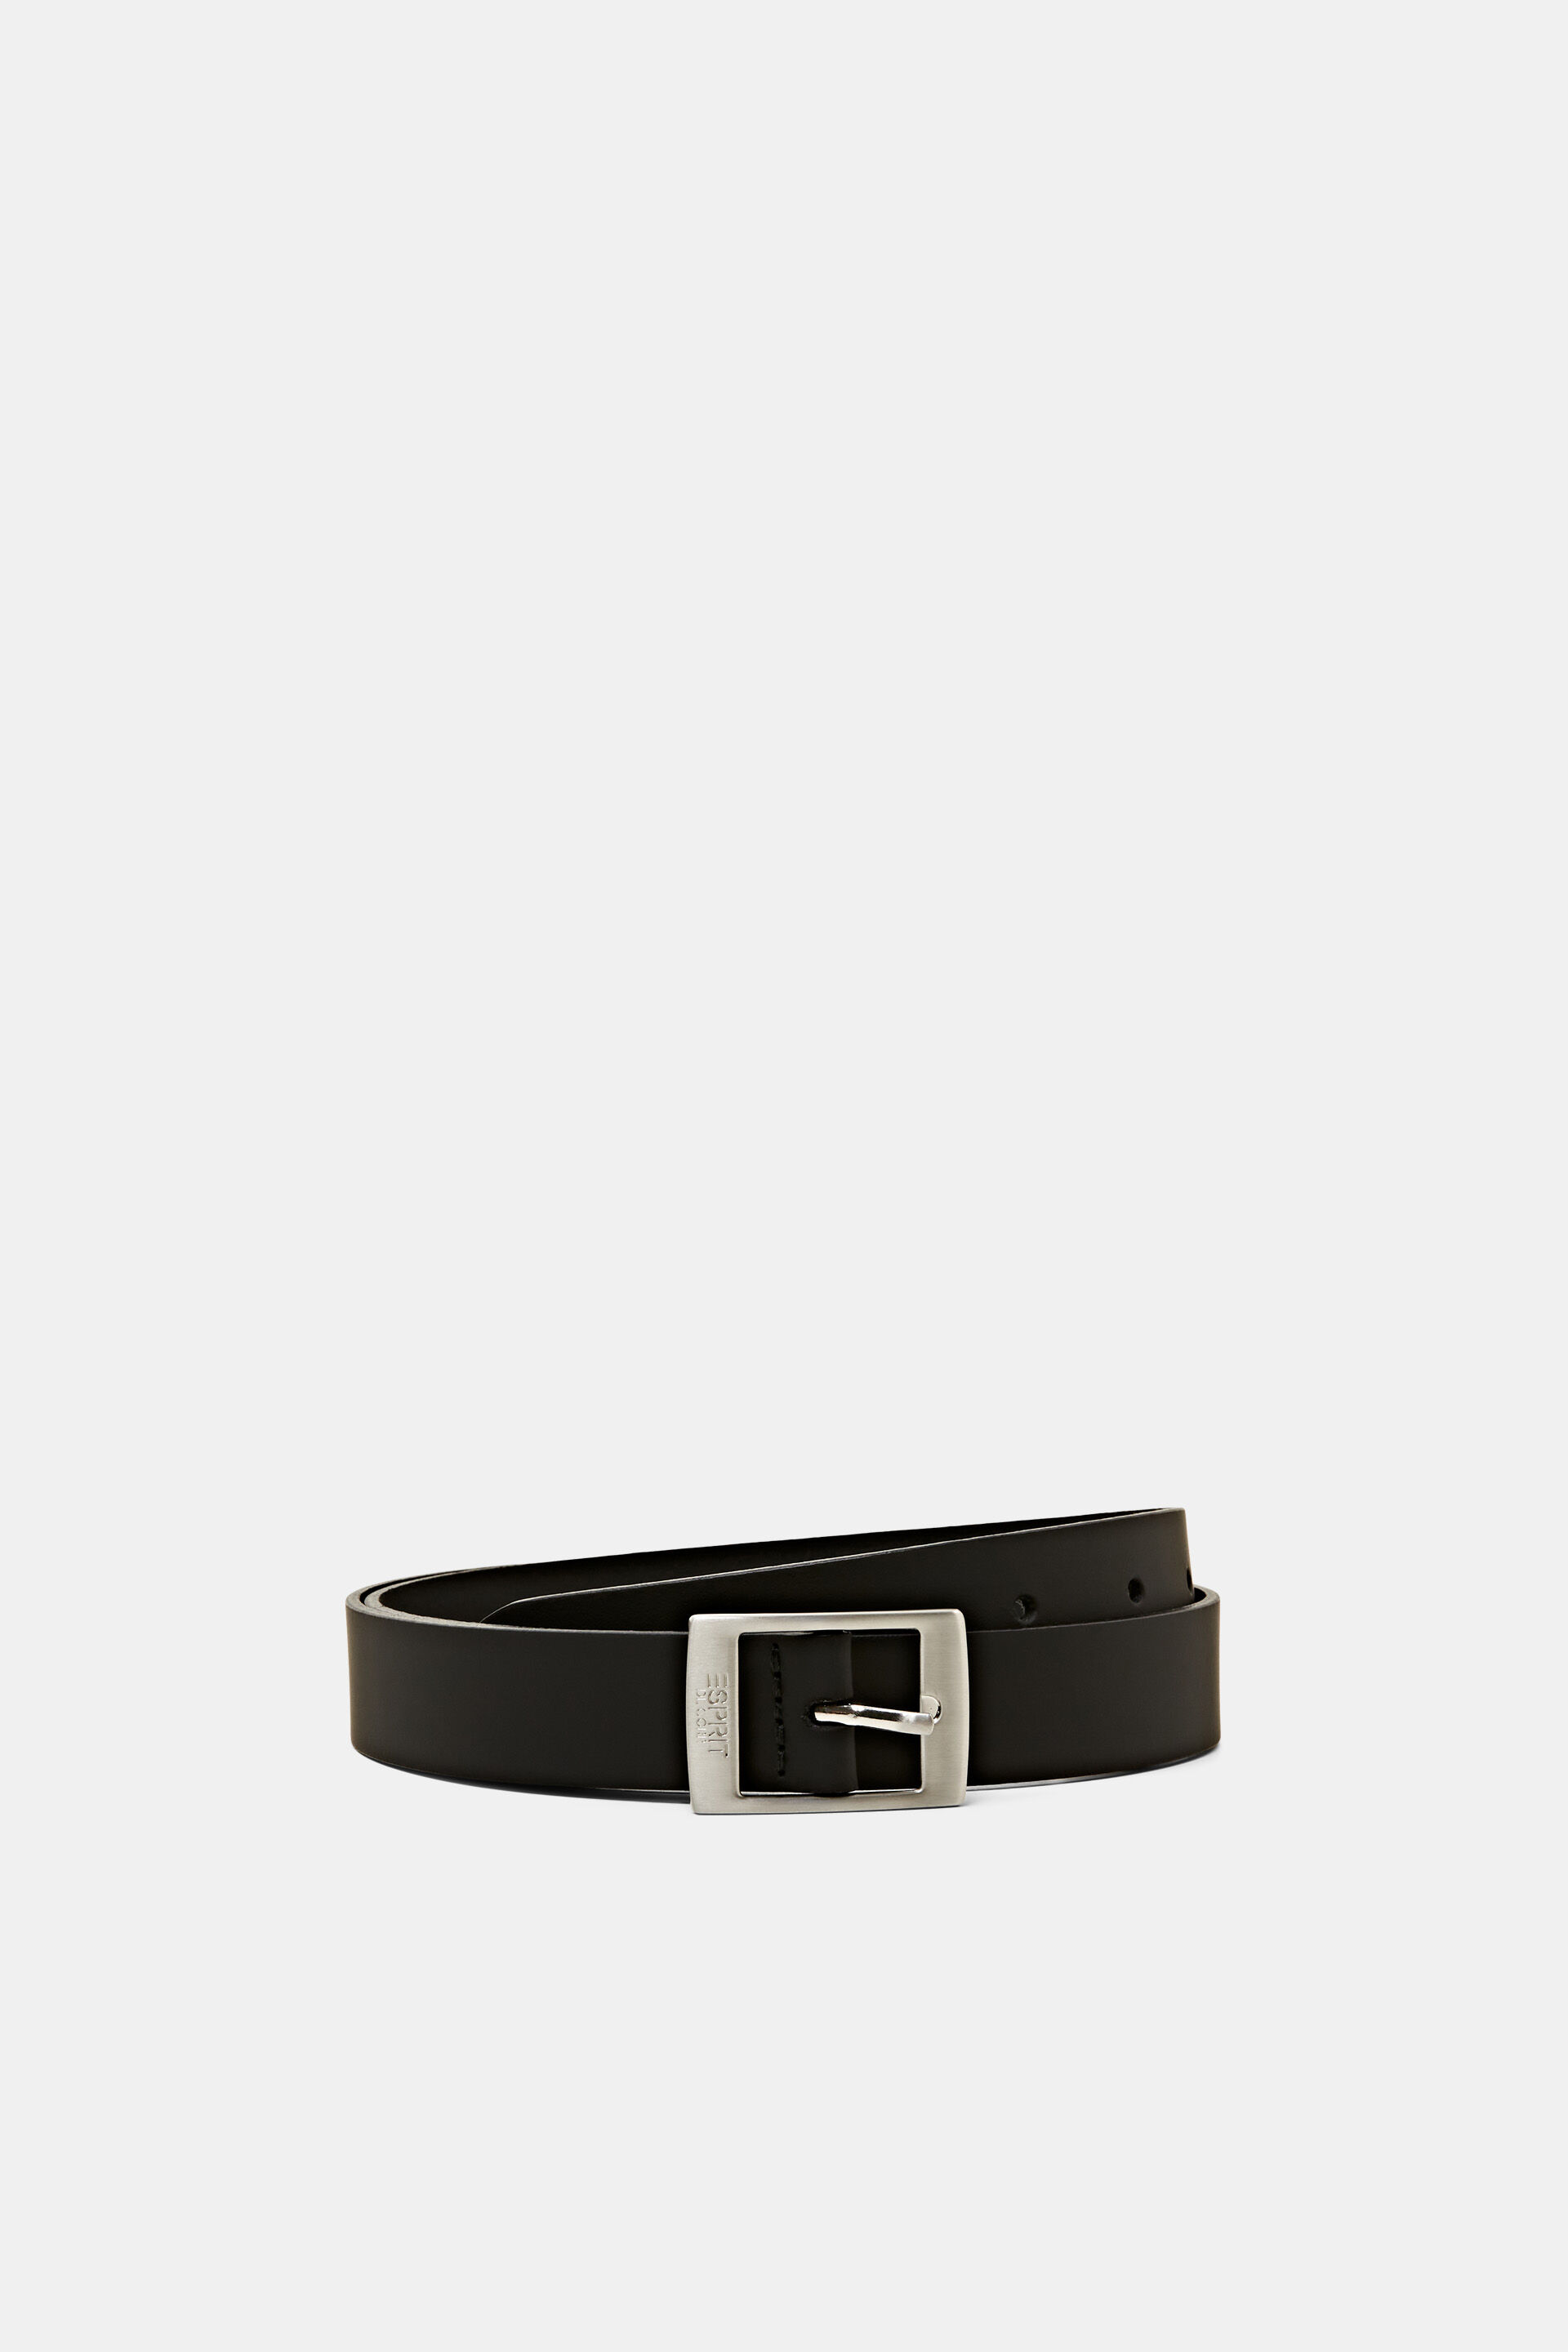 Esprit Online Store Belts leather